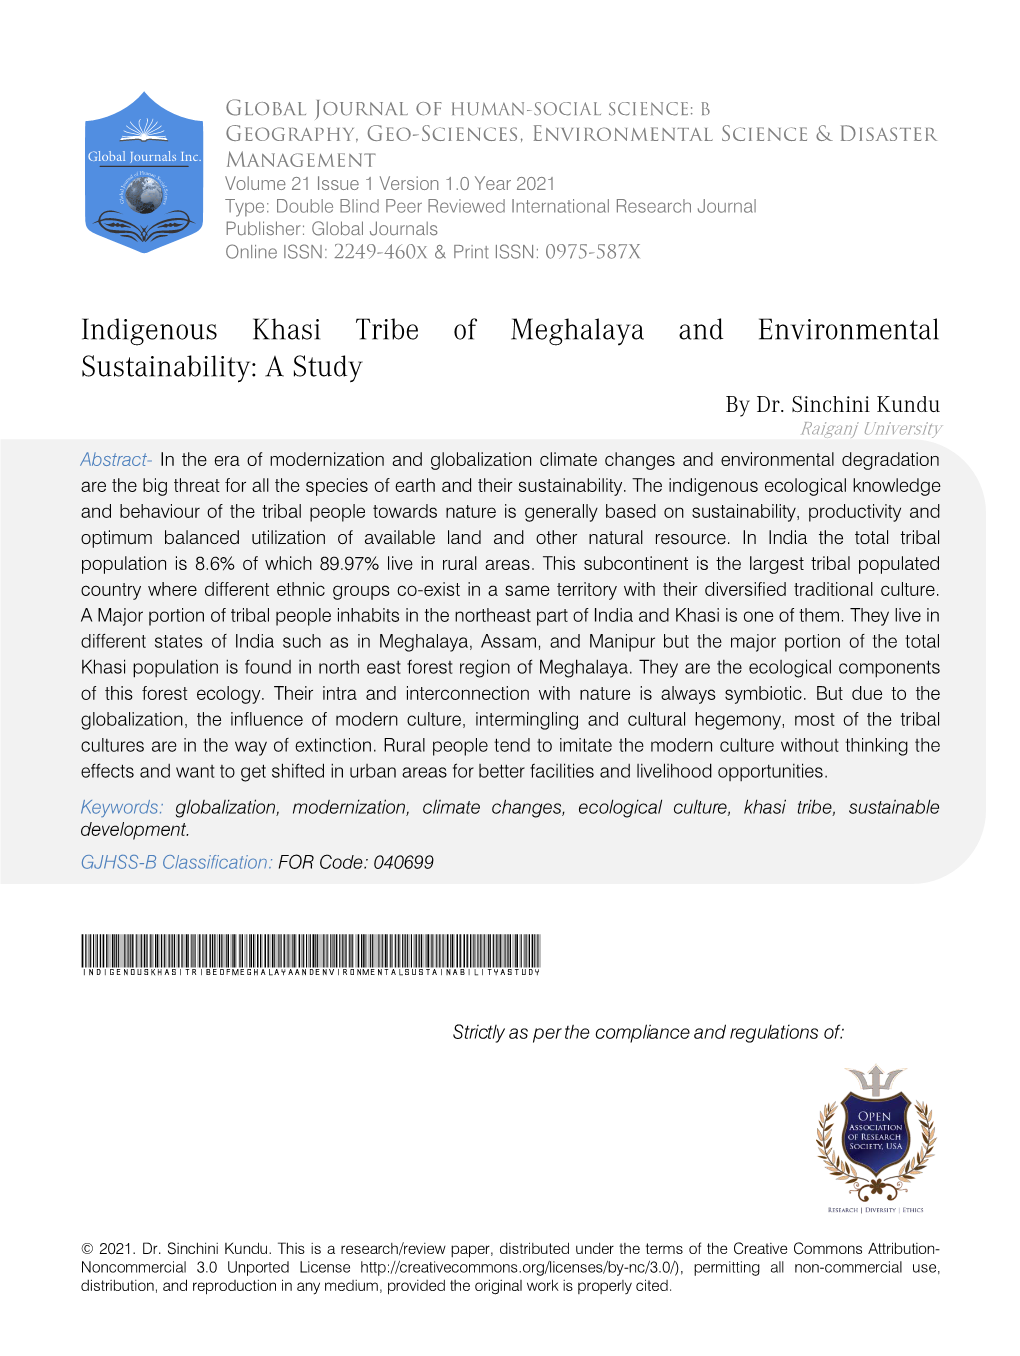 Indigenous Khasi Tribe of Meghalaya and Environmental Sustainability: a Study by Dr